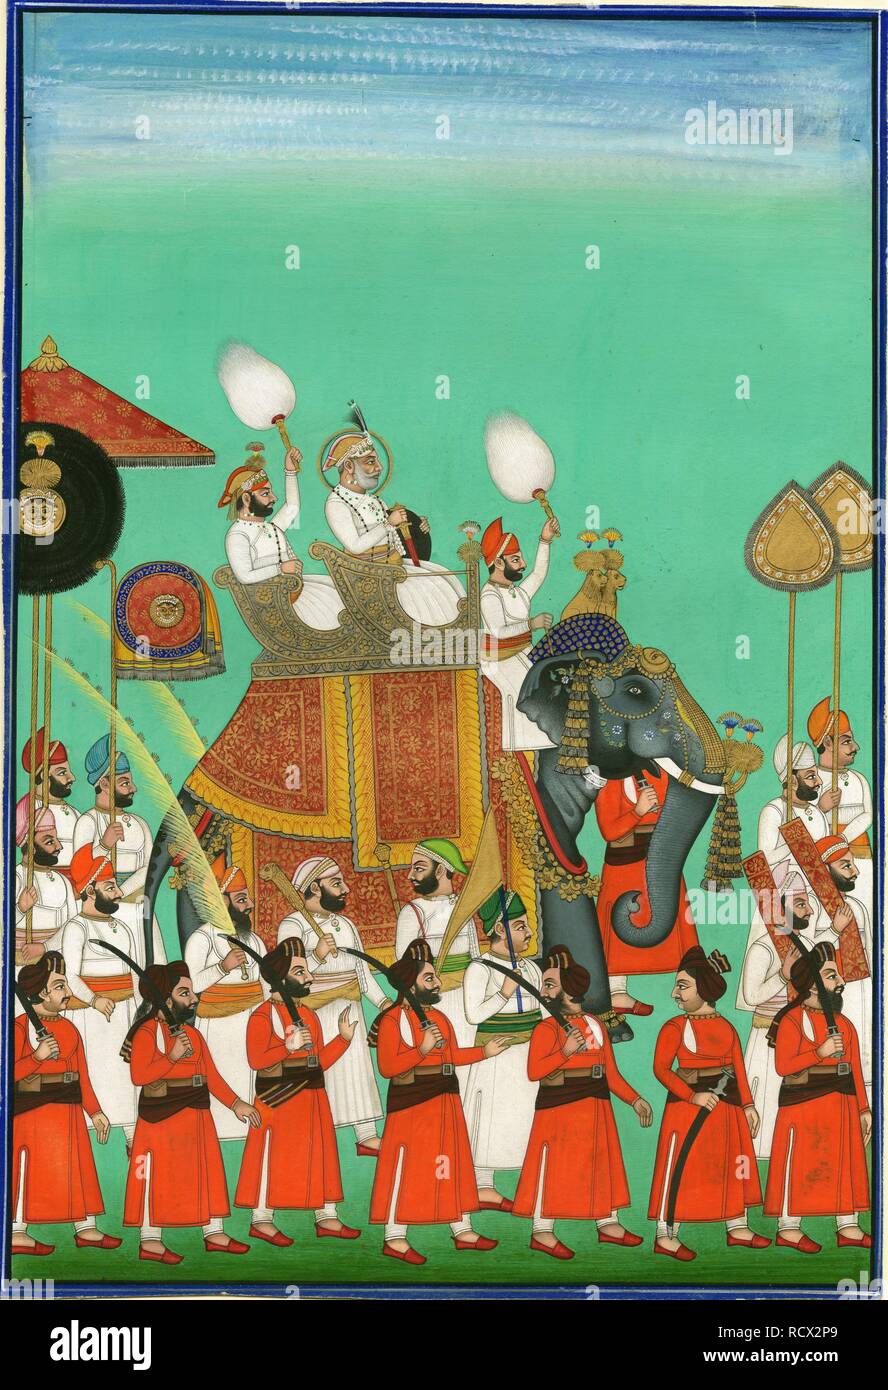 Rajah of Jodhpur Riding an Elephant. Museum: PRIVATE COLLECTION. Author: INDIAN ART. Stock Photo